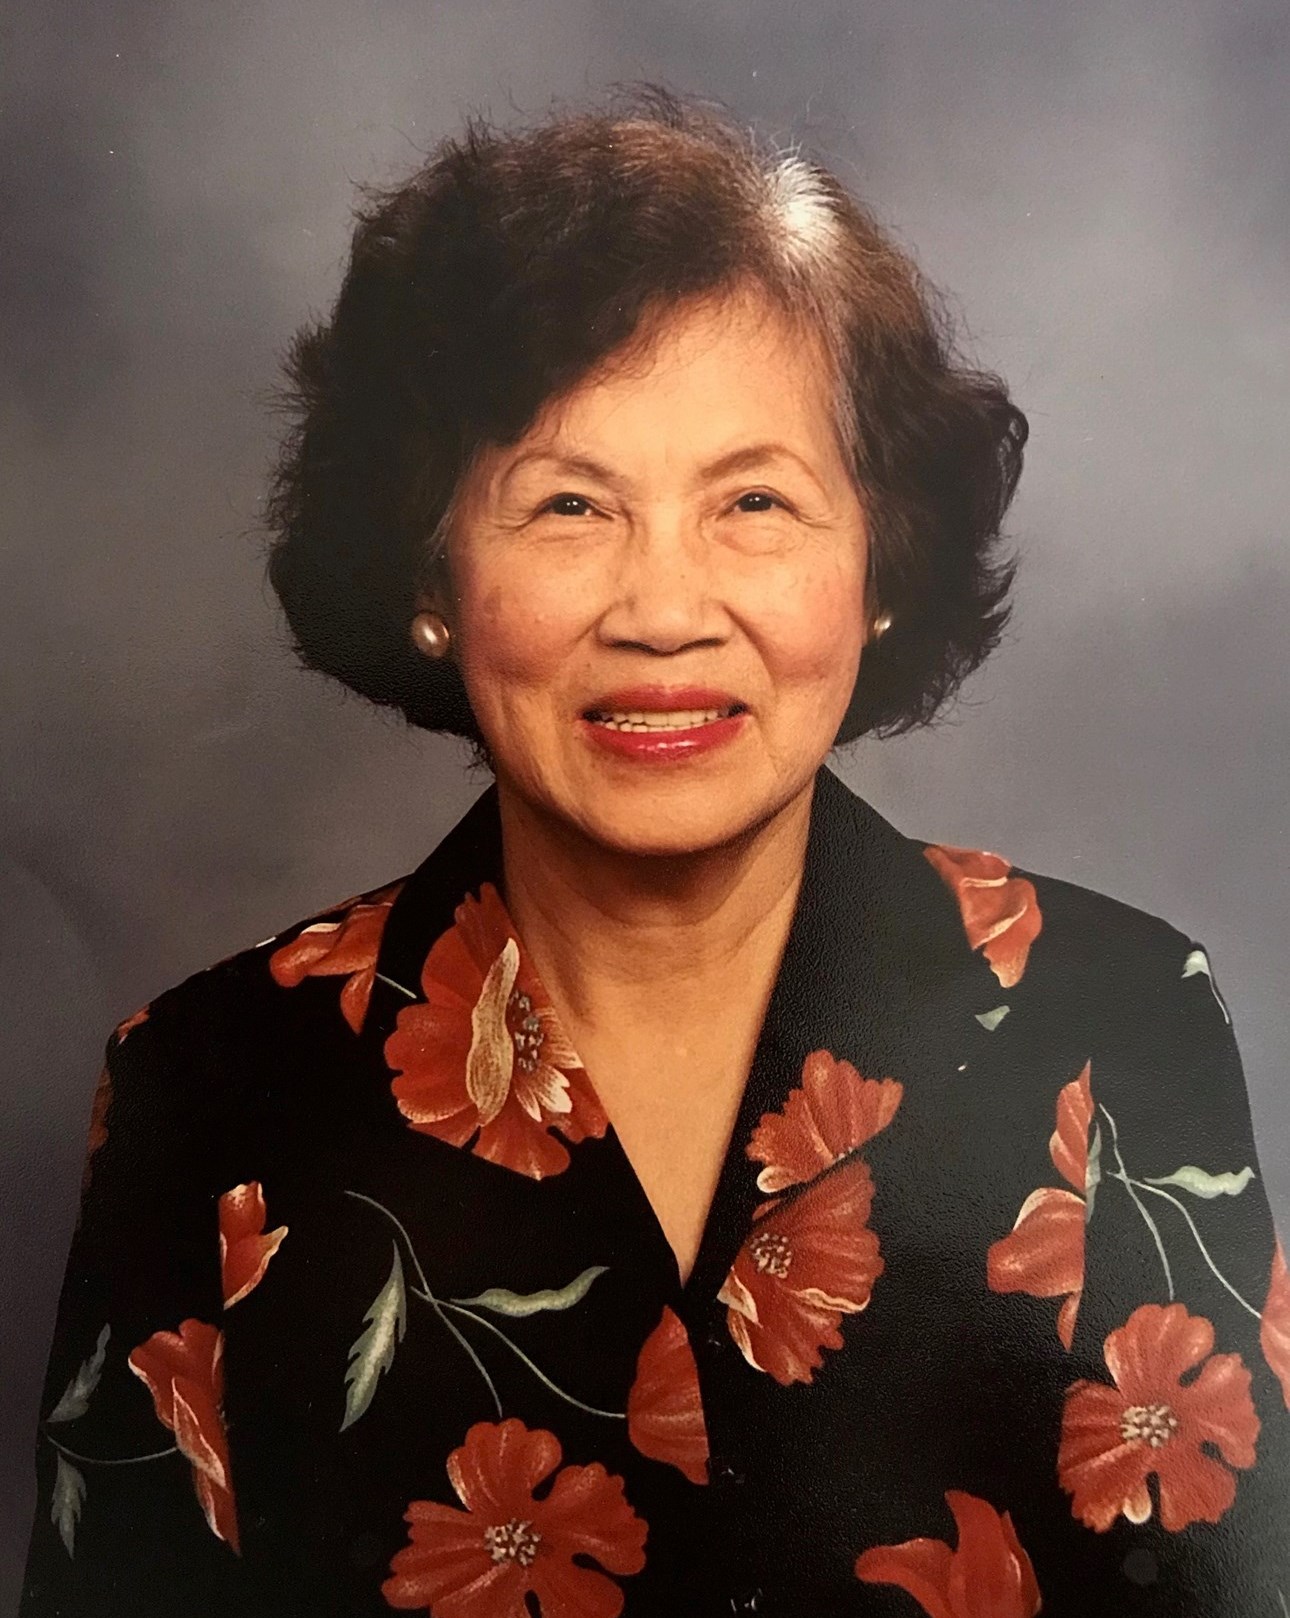 Obituary of Kim Ngoc Nguyen Leonie Noella - 06/12/2019 - From the Family